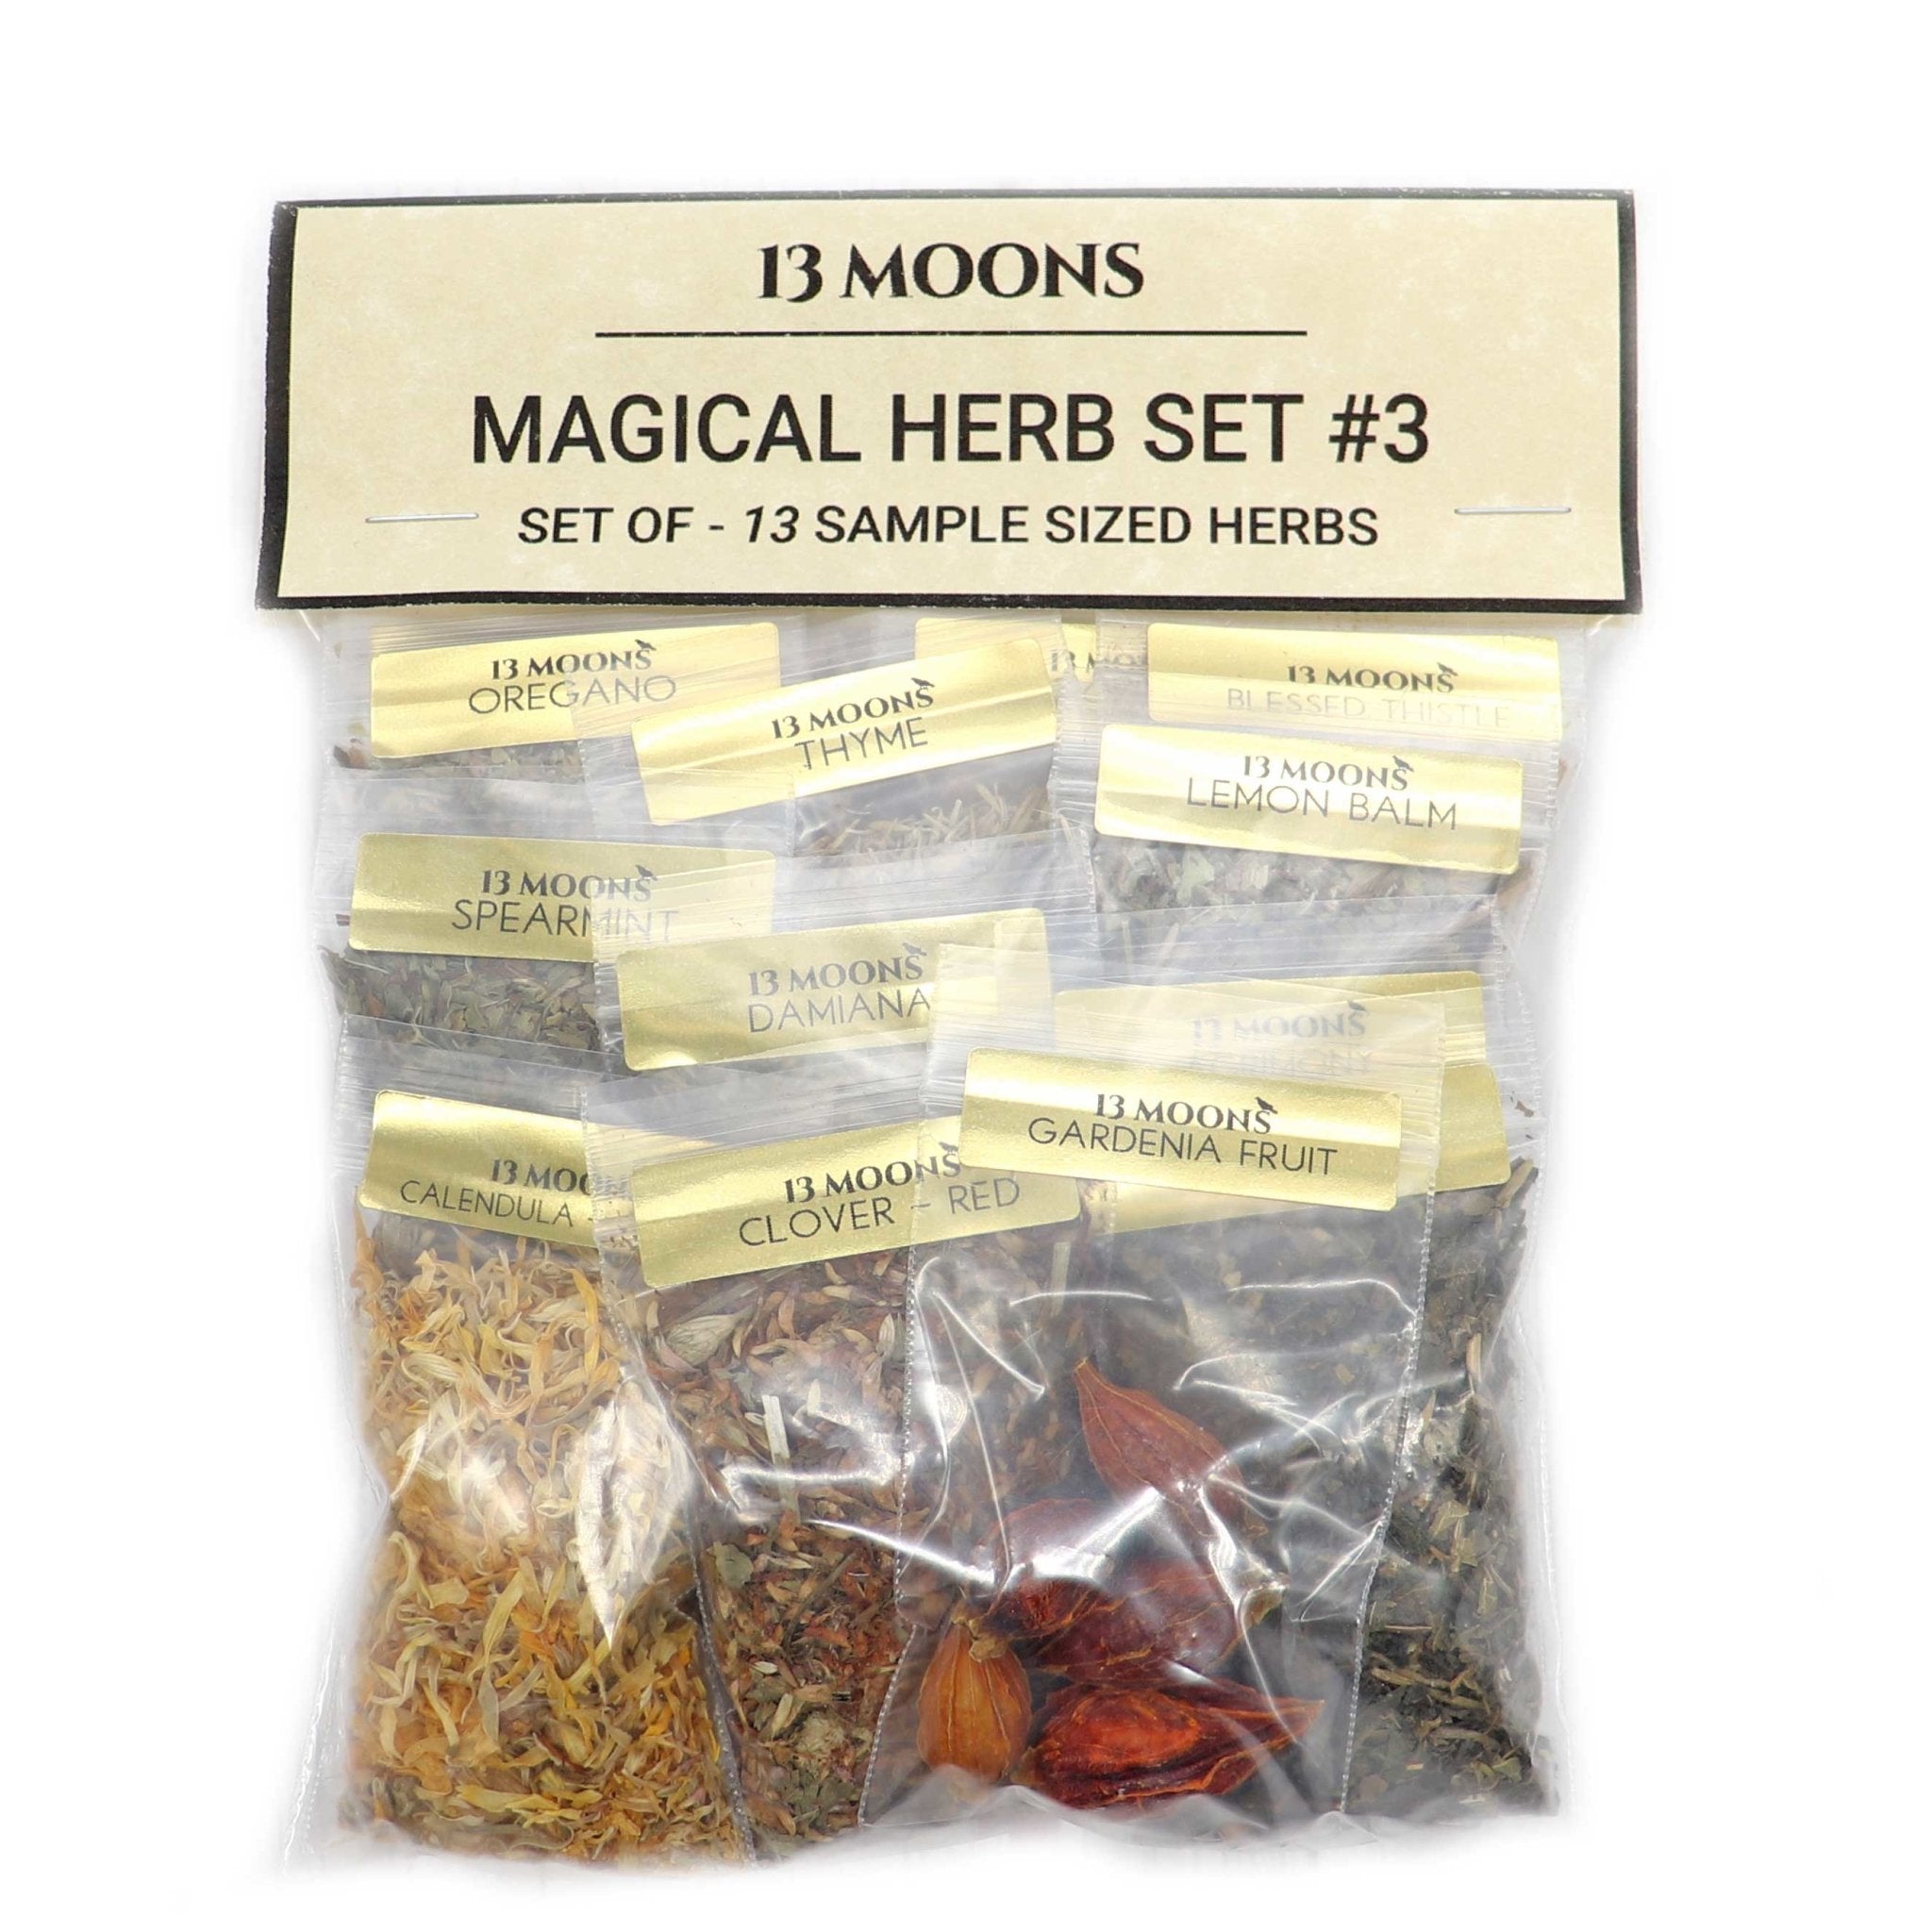 Magical Herb Set #3 - 13 Moons